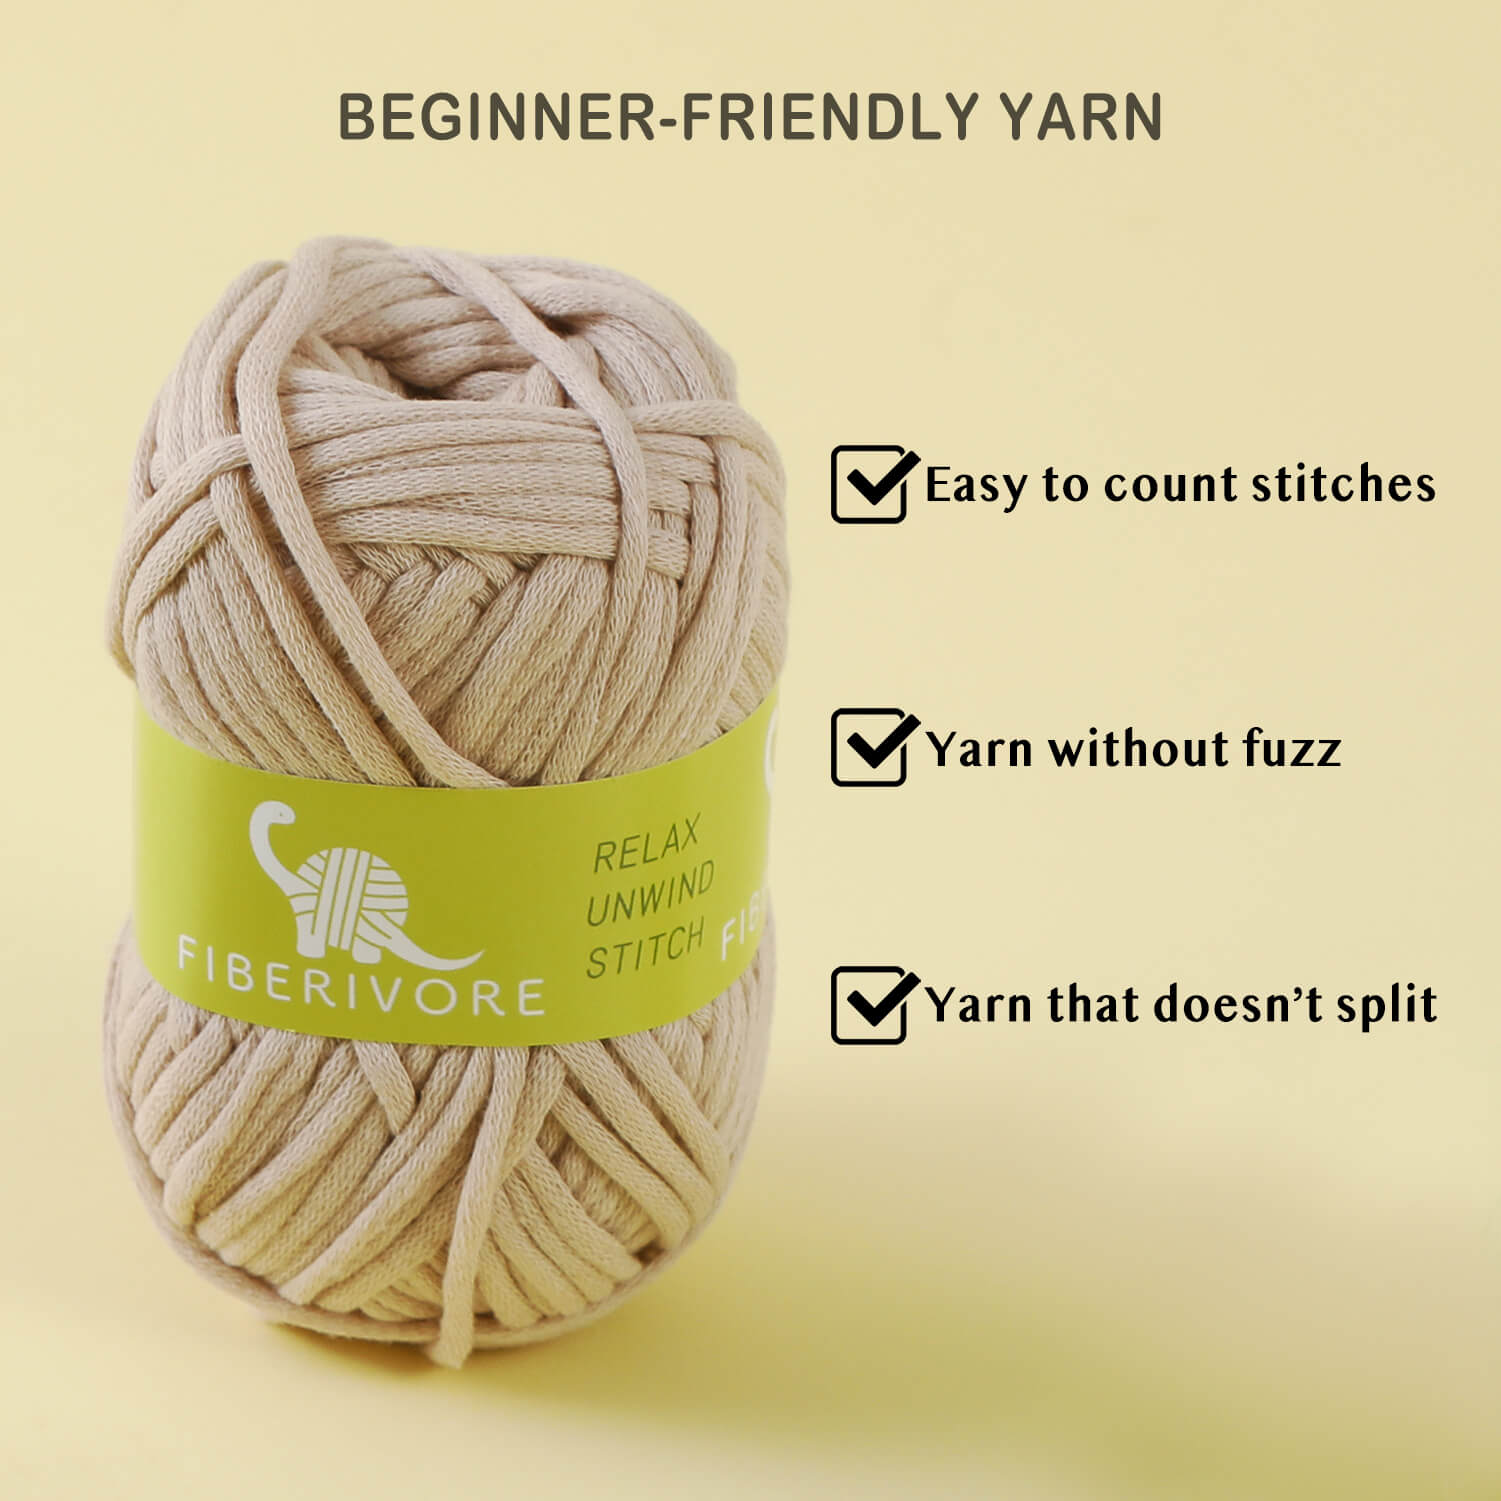 Crochet turtle kit beginner with yarn, crochet turtle plush - Shop